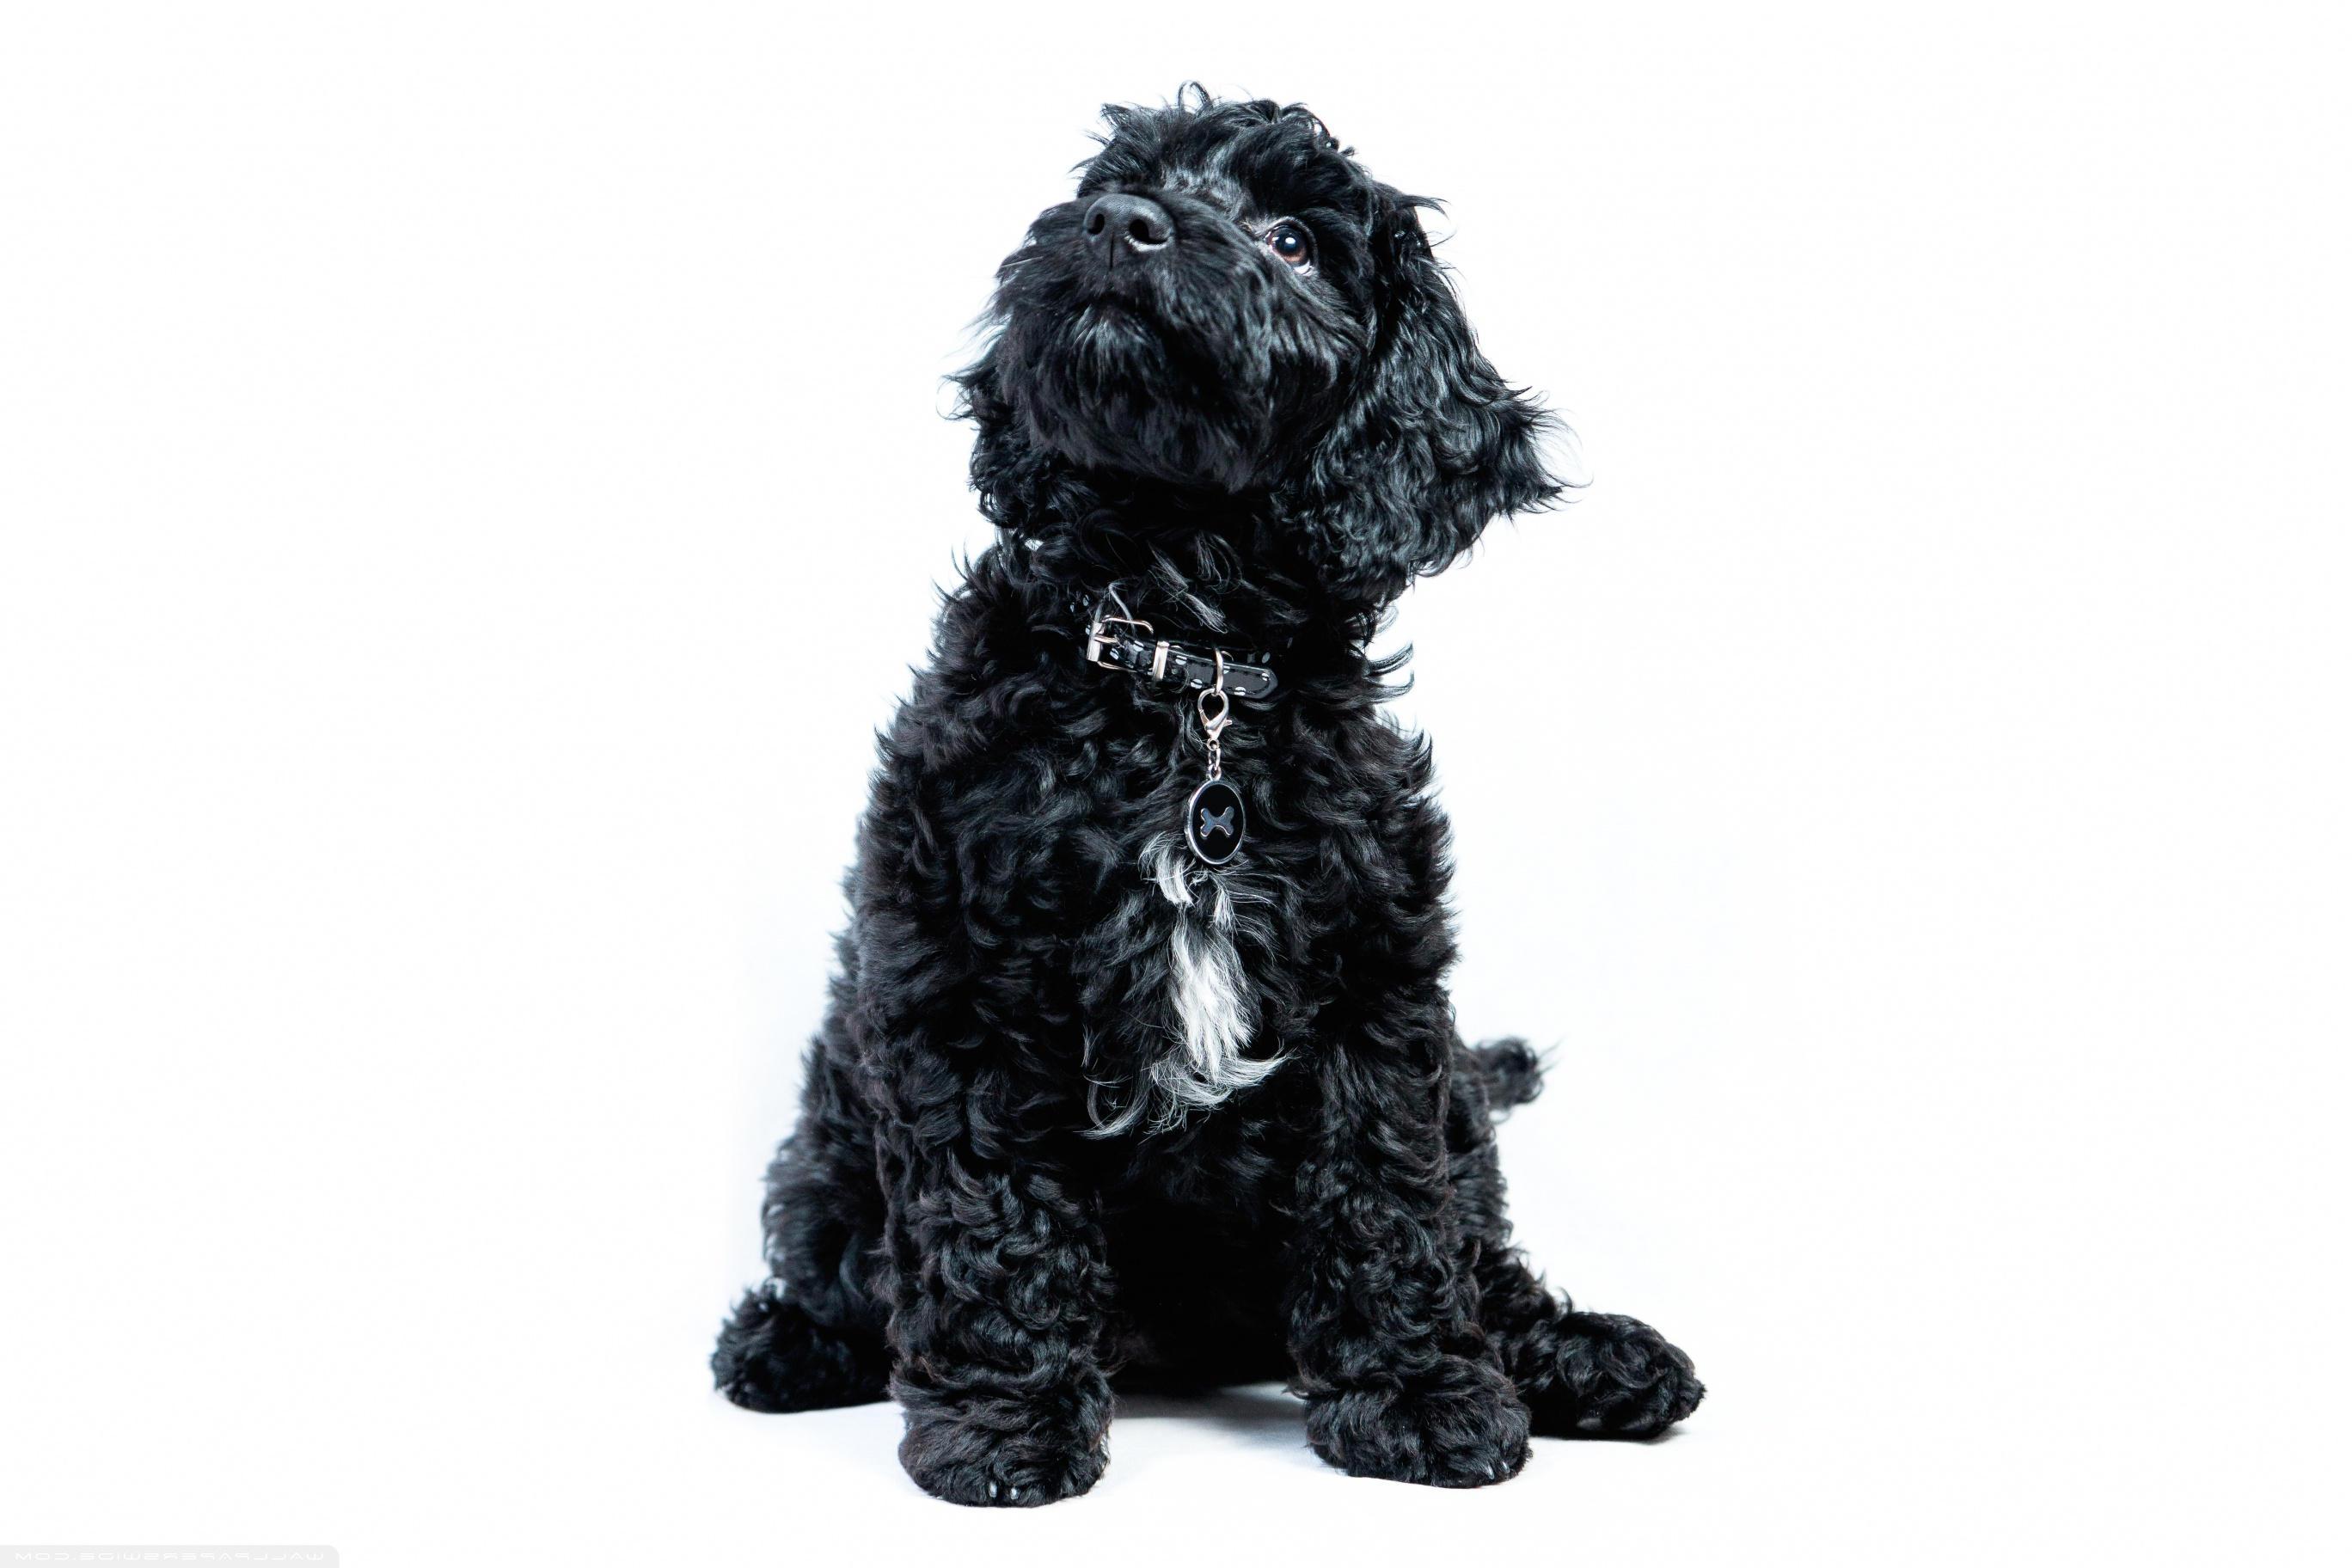 A Black Cockapoo Puppy, Dog,. download high quality desktop